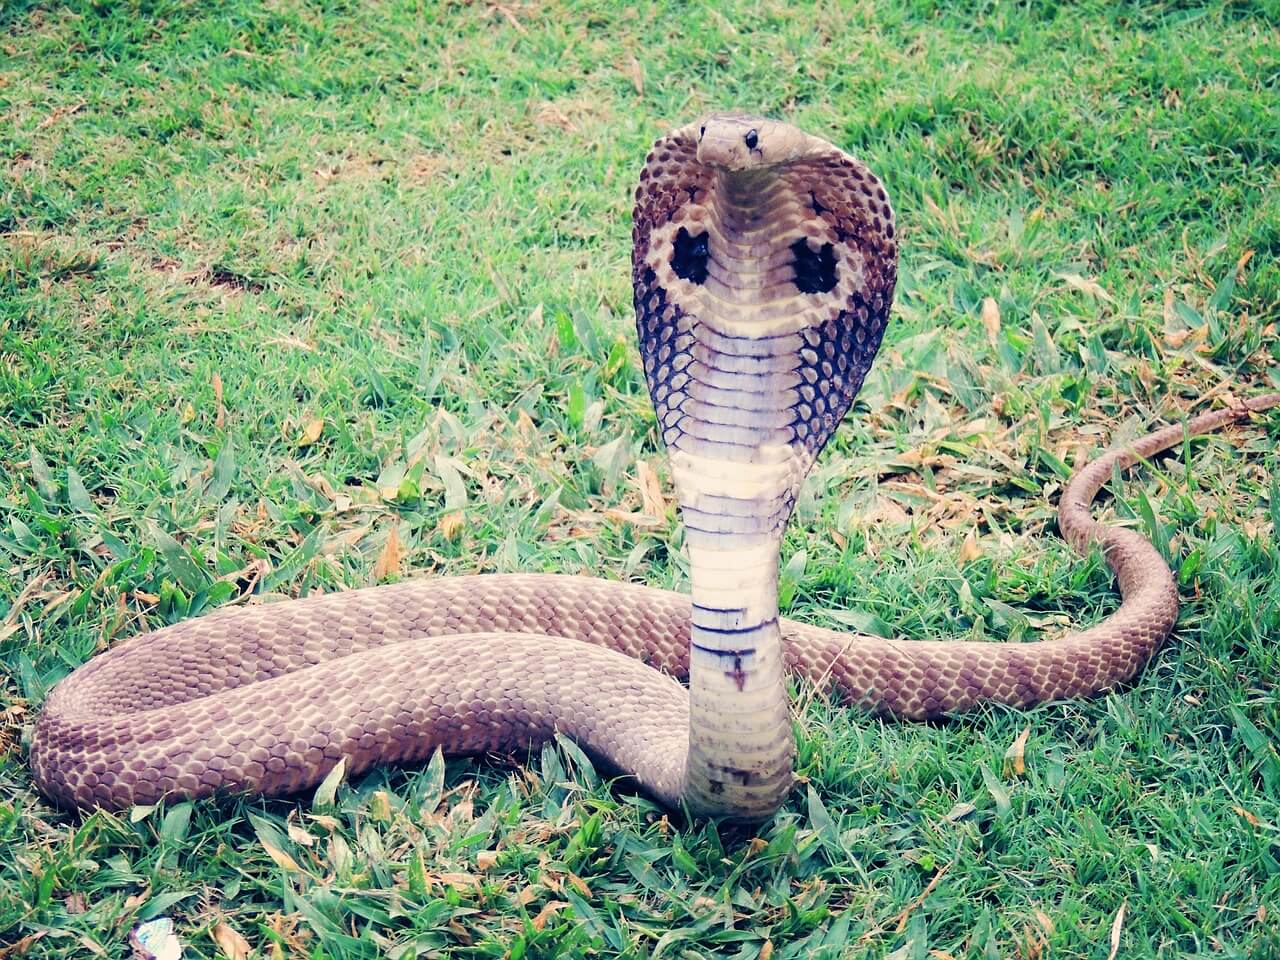 https://pixabay.com/en/king-cobra-cobra-snake-reptile-405623/